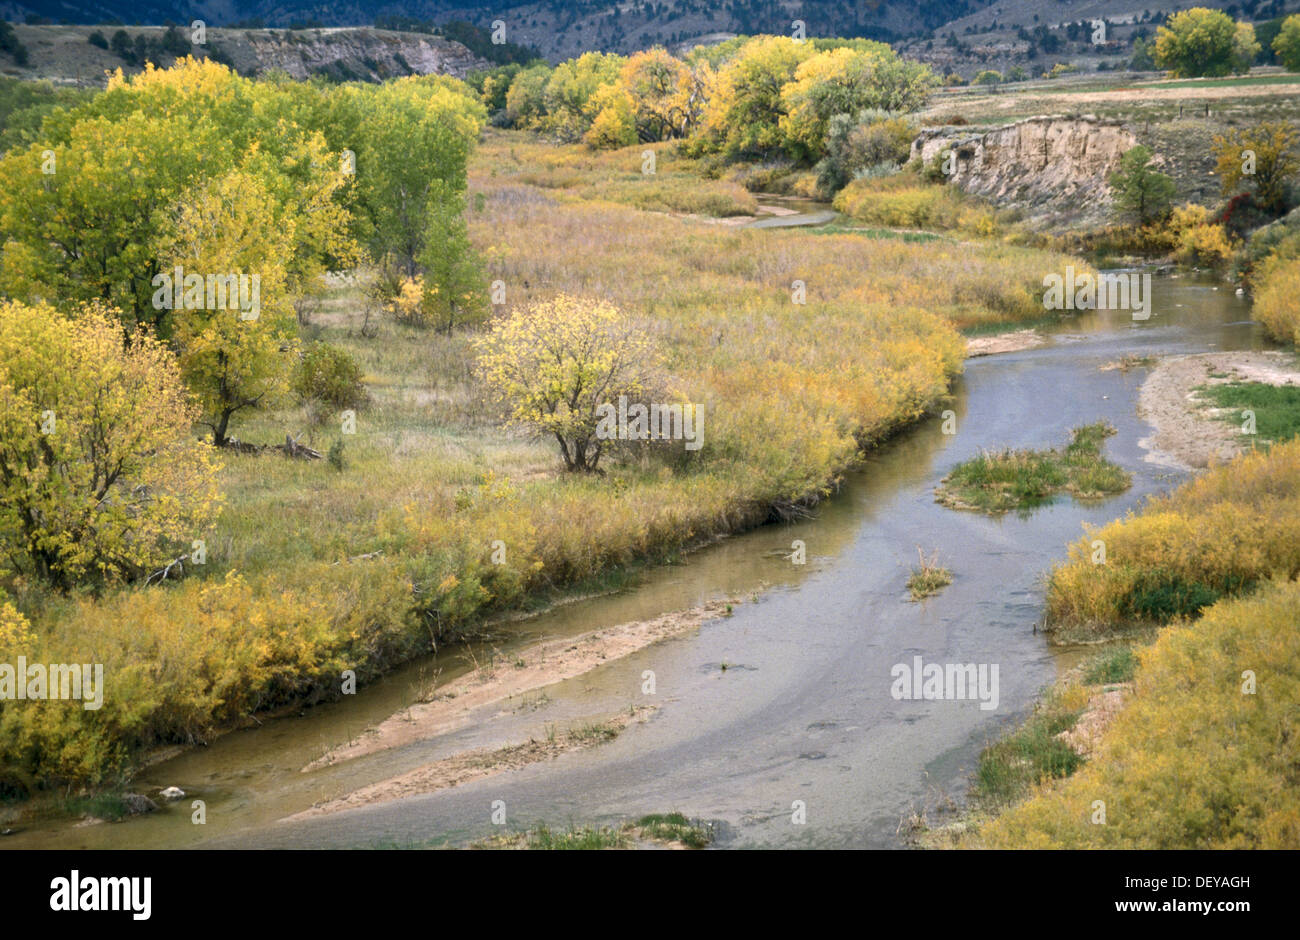 fall-colors-along-cheyenne-river-south-dakota-usa-DEYAGH.jpg